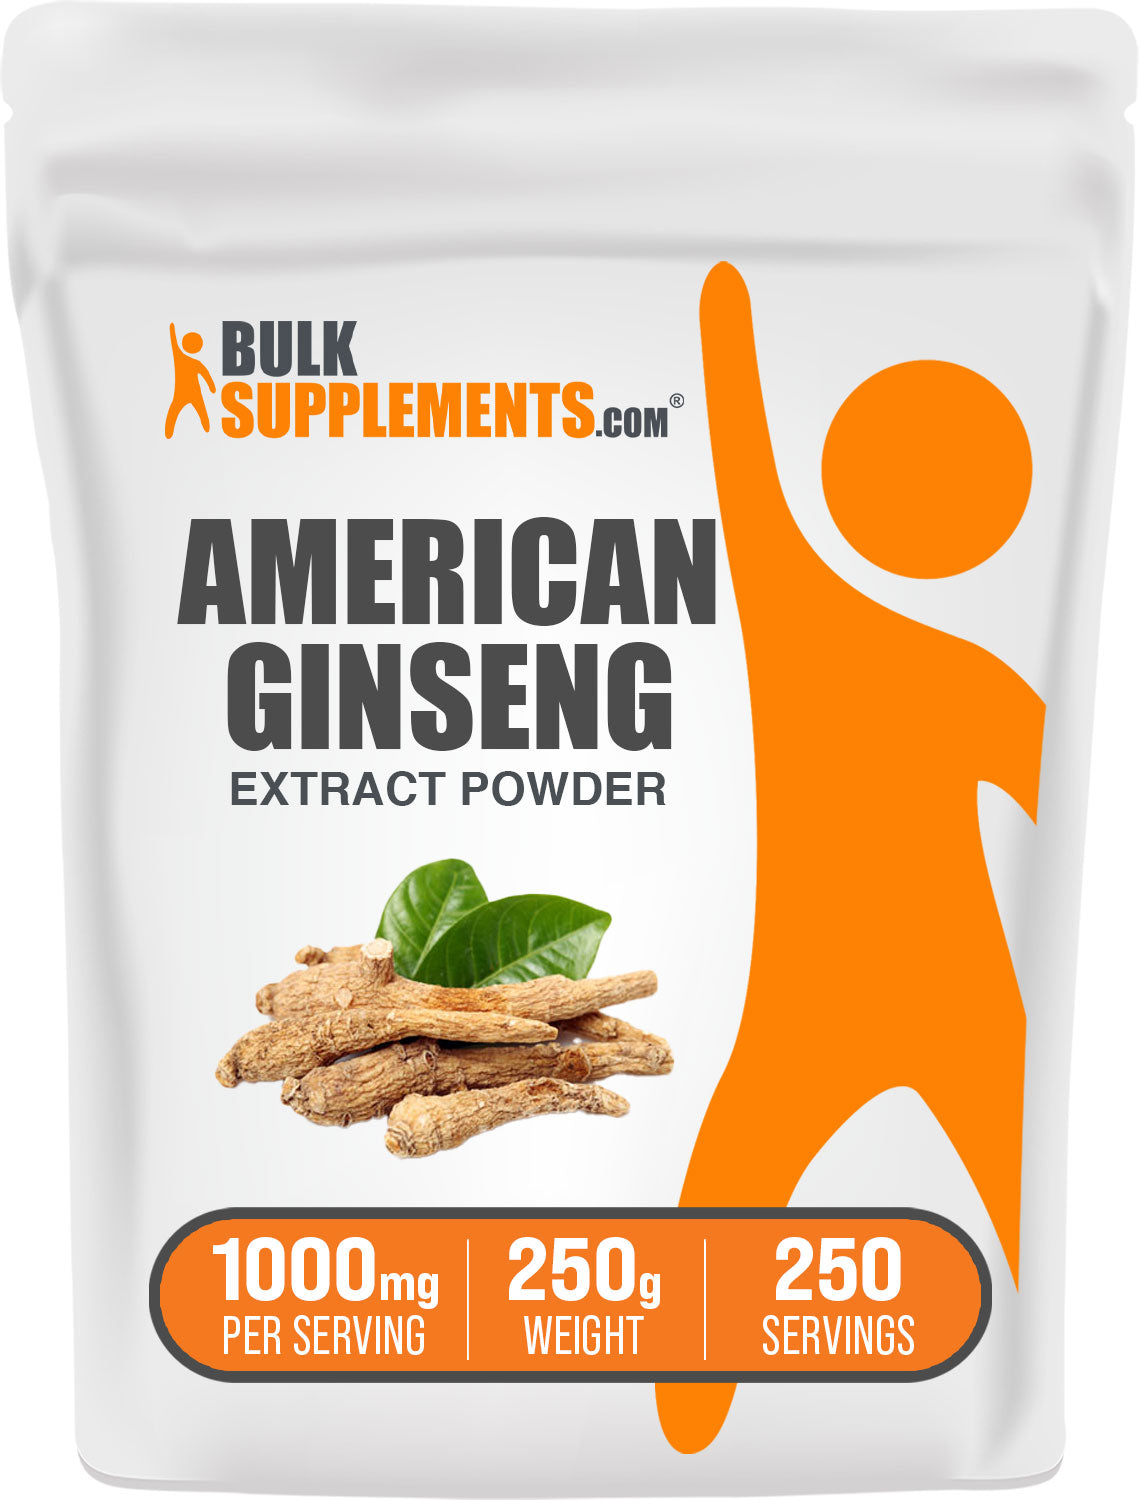 BulkSupplements.com American Ginseng Extract Powder 250g Bag